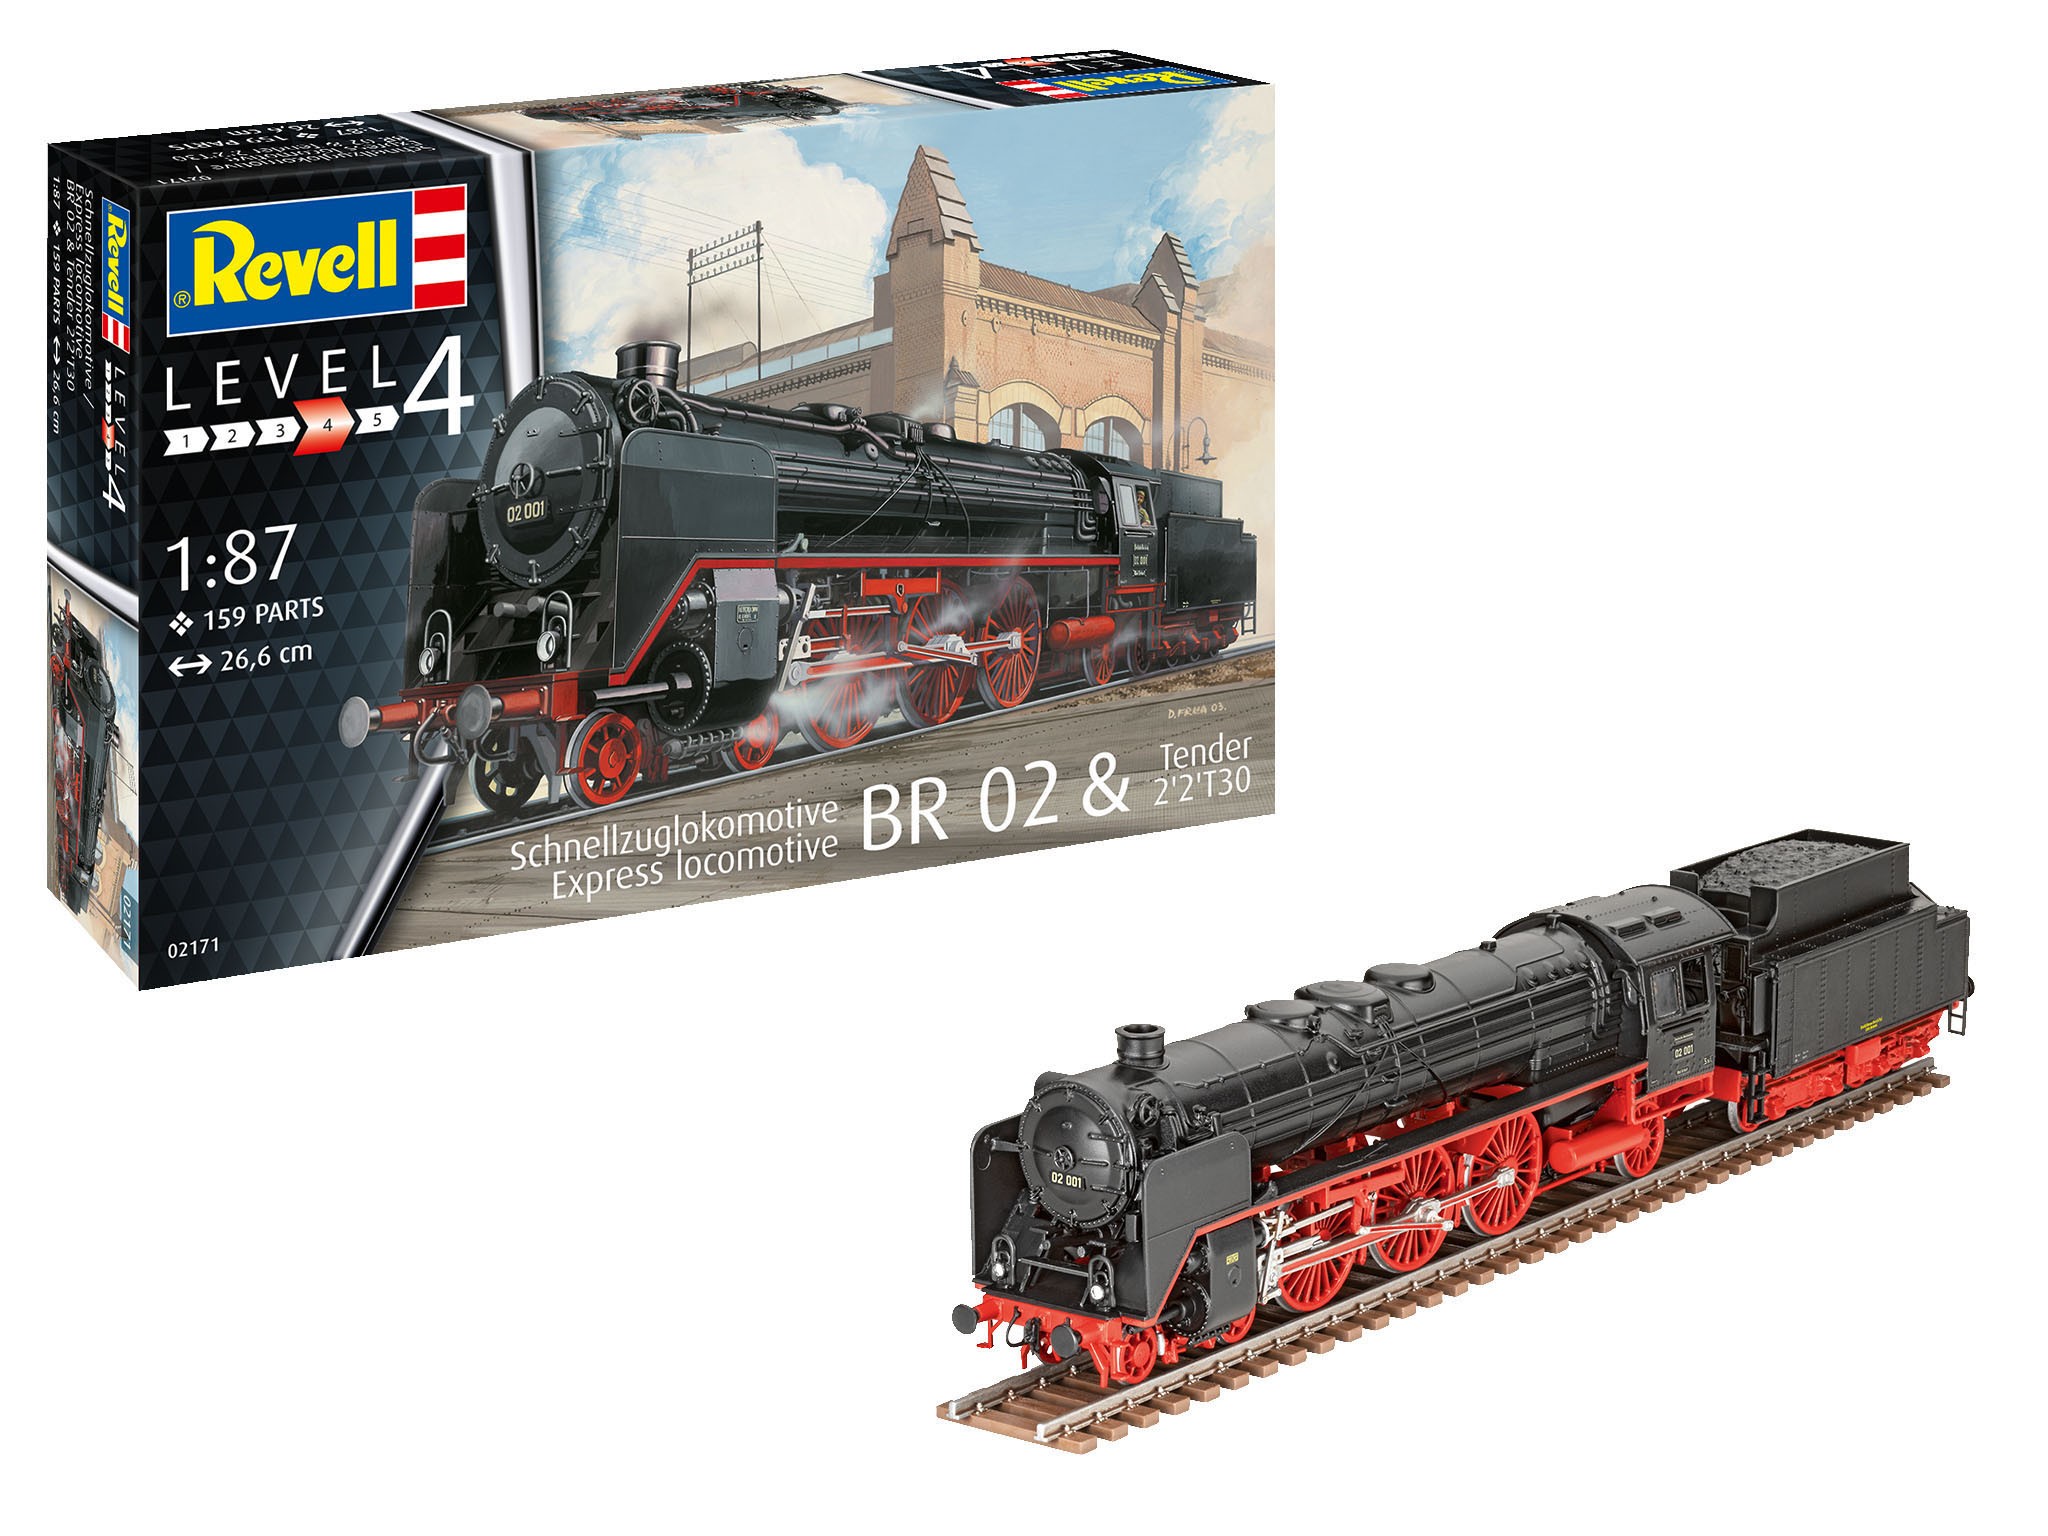 Revell 02171 Express locomotive BR 02 & Tender 2'2'T30  1/87